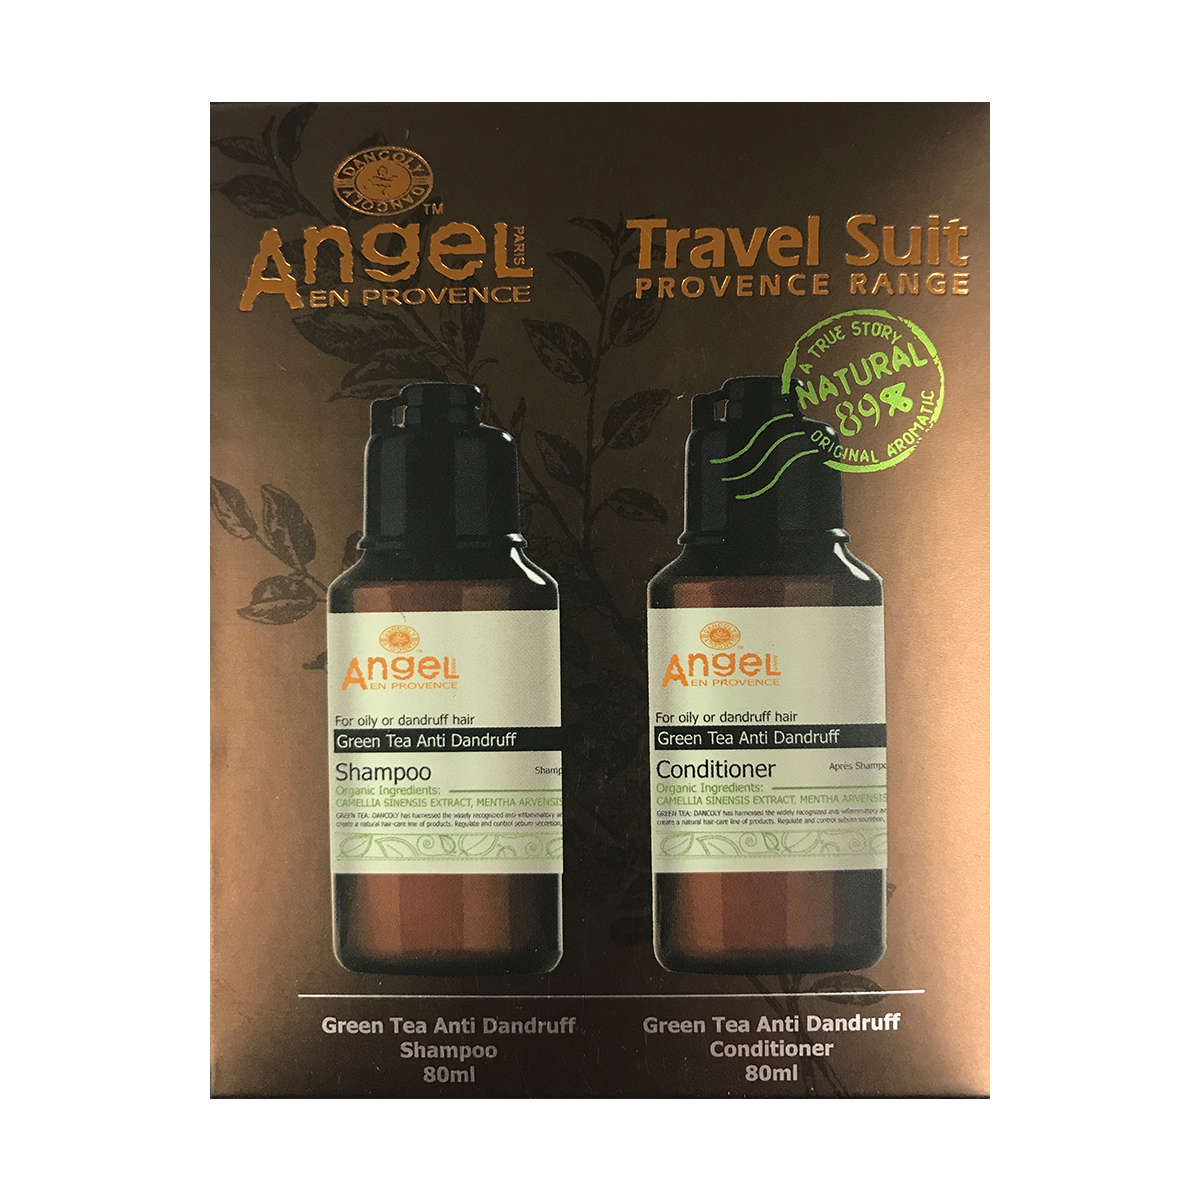 Green Tea Anti Dandruff Travel Duo Pack - Shampoo Plus